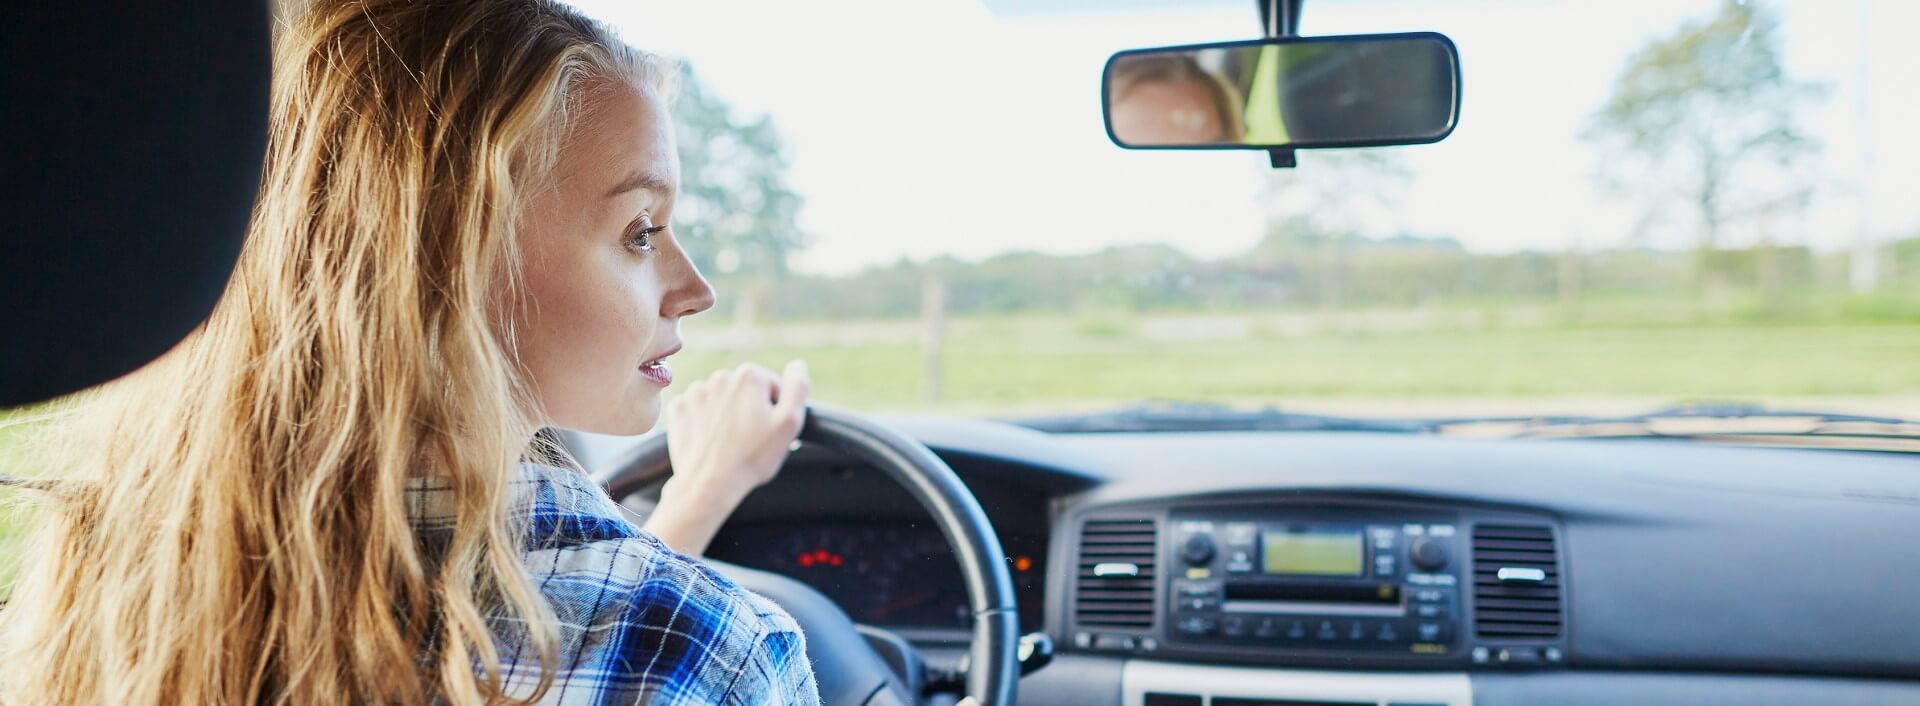 How to Keep Teen Drivers Safe - Burnett & Williams